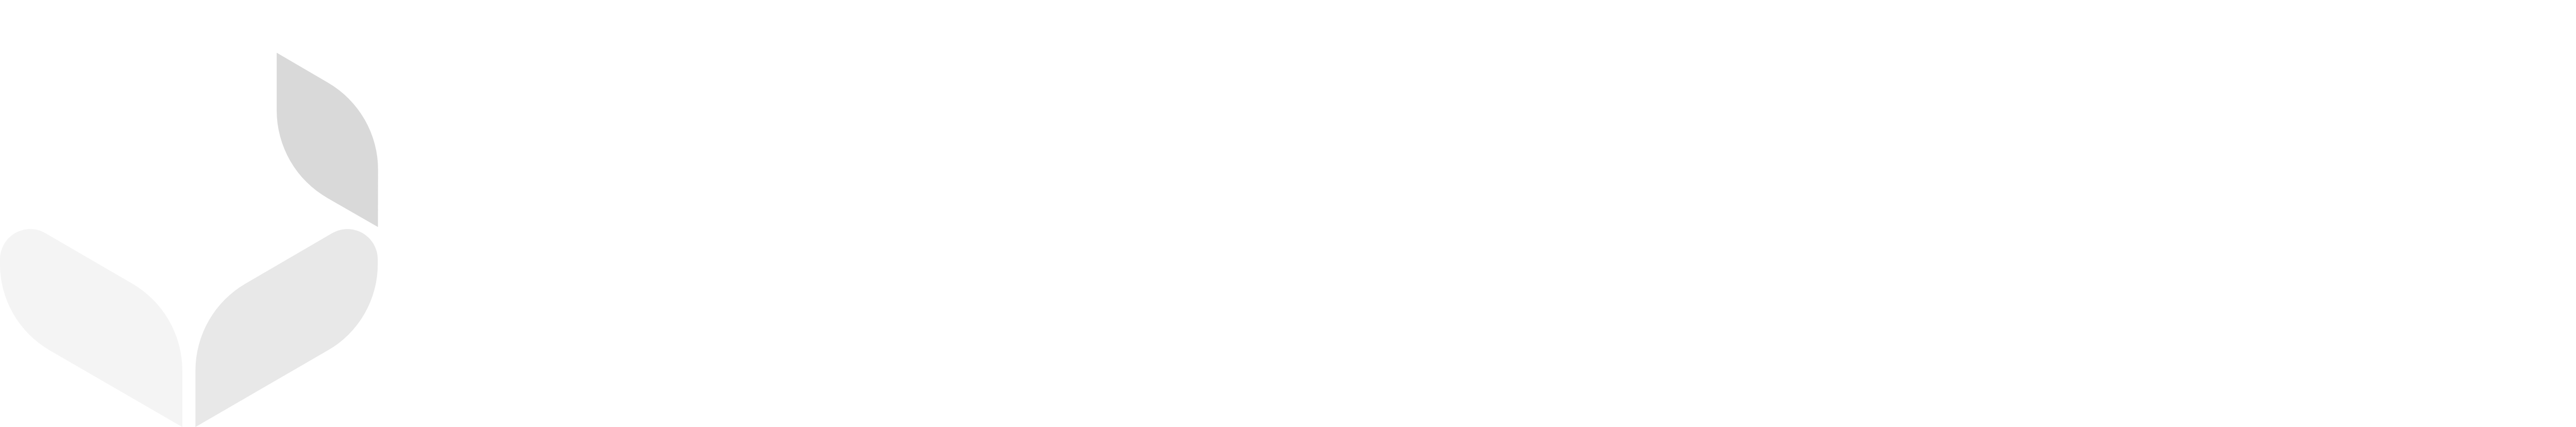 Luxera Logo White - Custom Enterprise Software Development